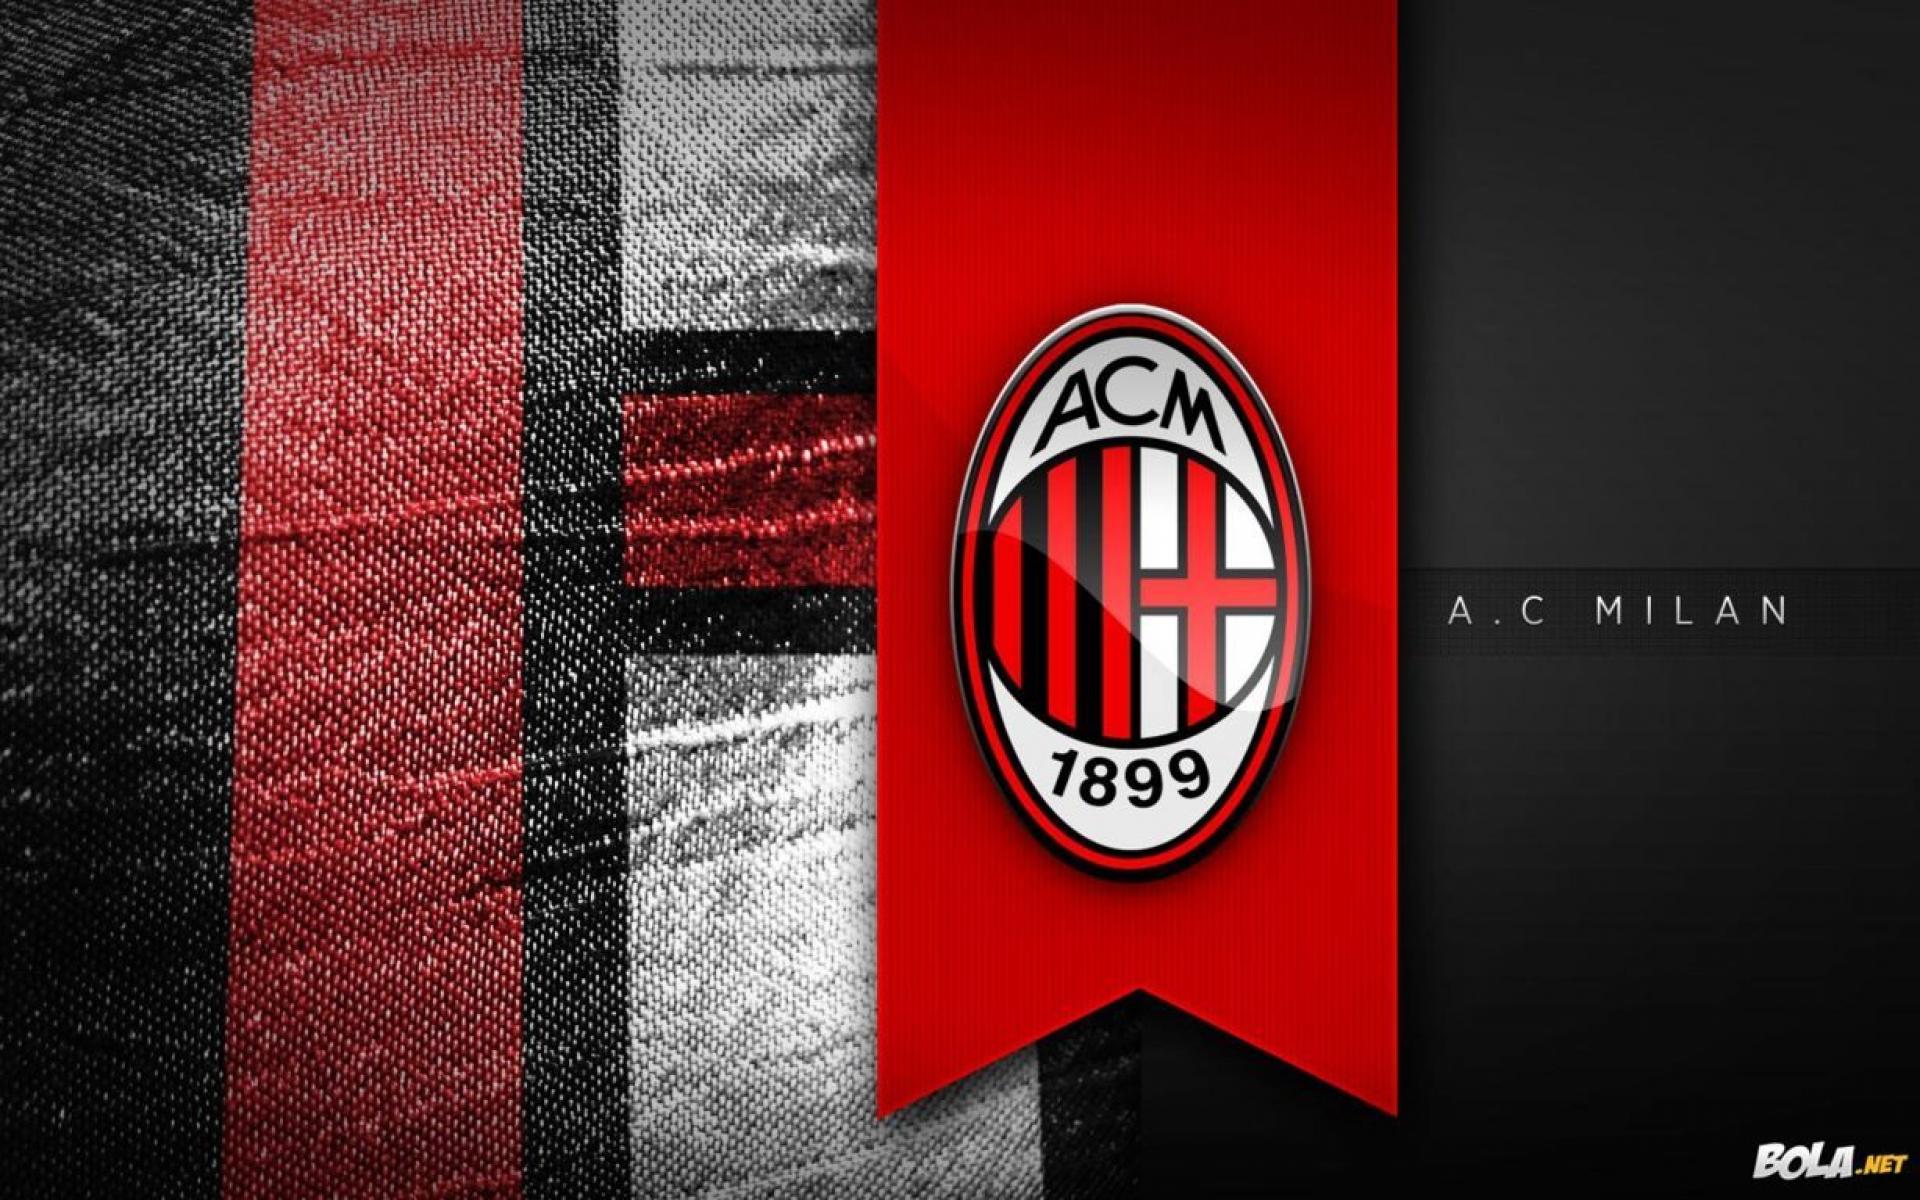 Ac Milan Club Football Hd Image Wallpaper Sports Wallpaper Better